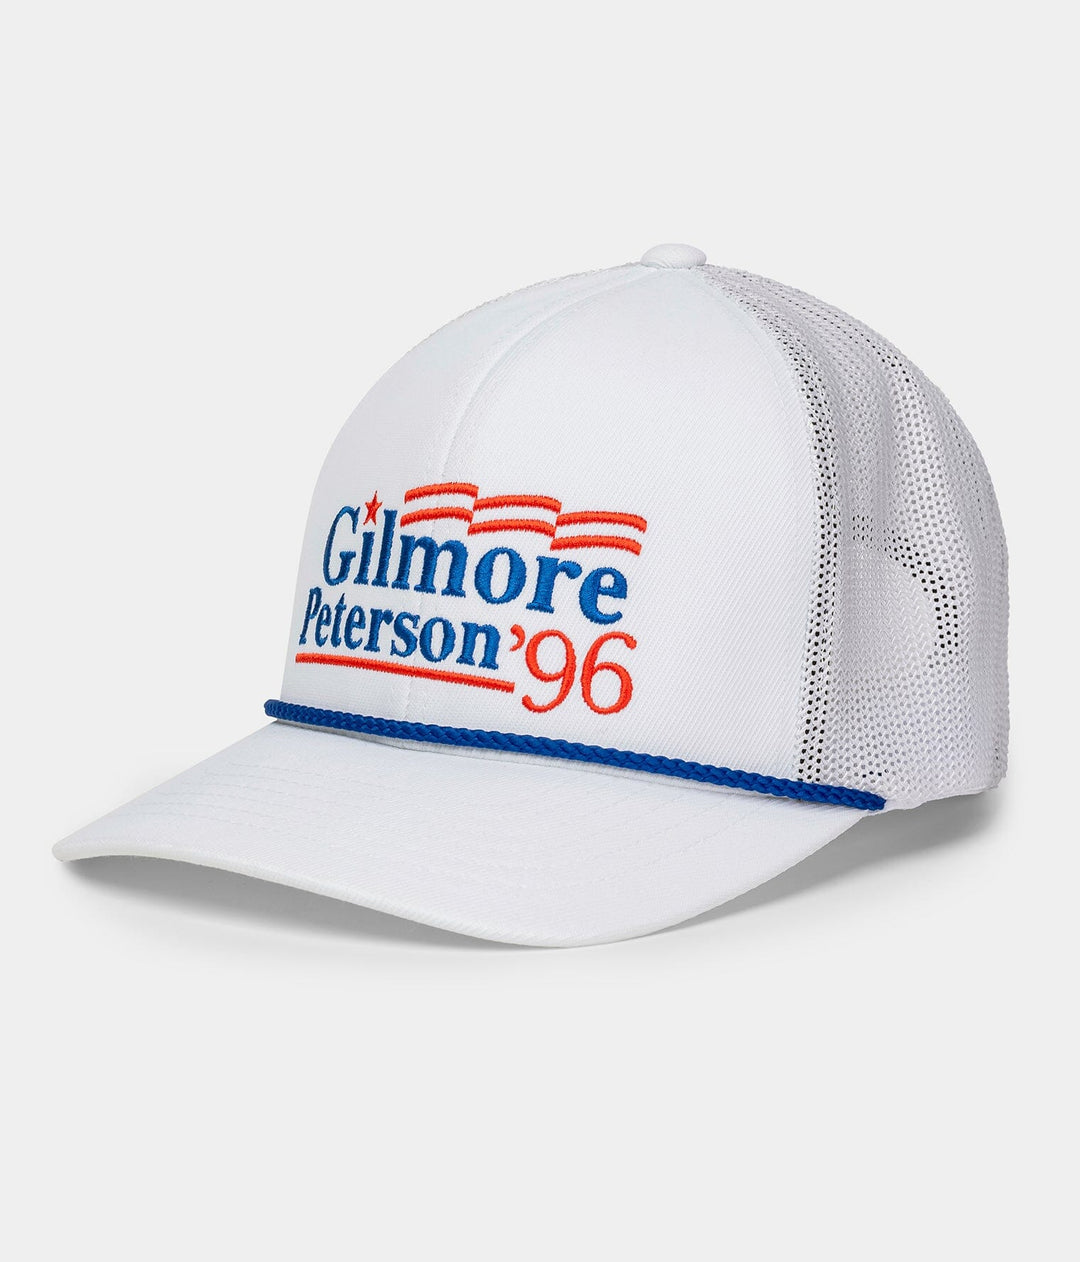 Gilmore Peterson 96' Snapback Hat